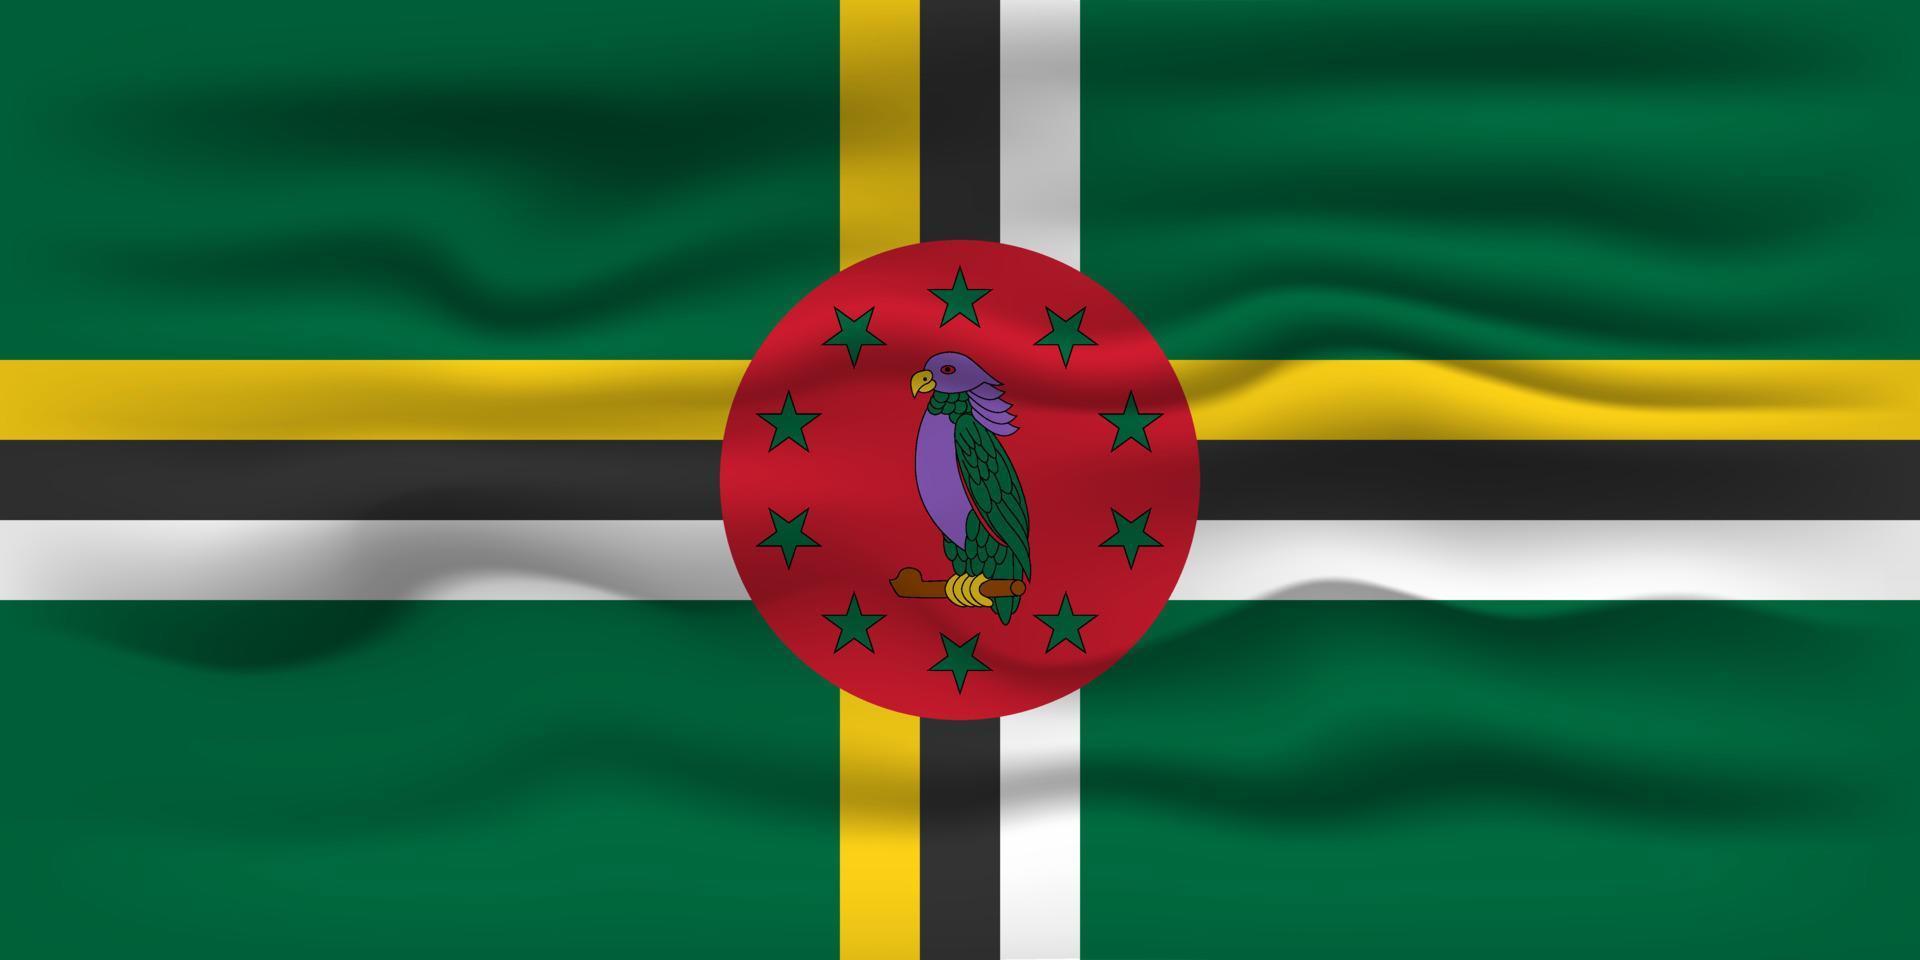 vinka flagga av de Land dominica. vektor illustration.